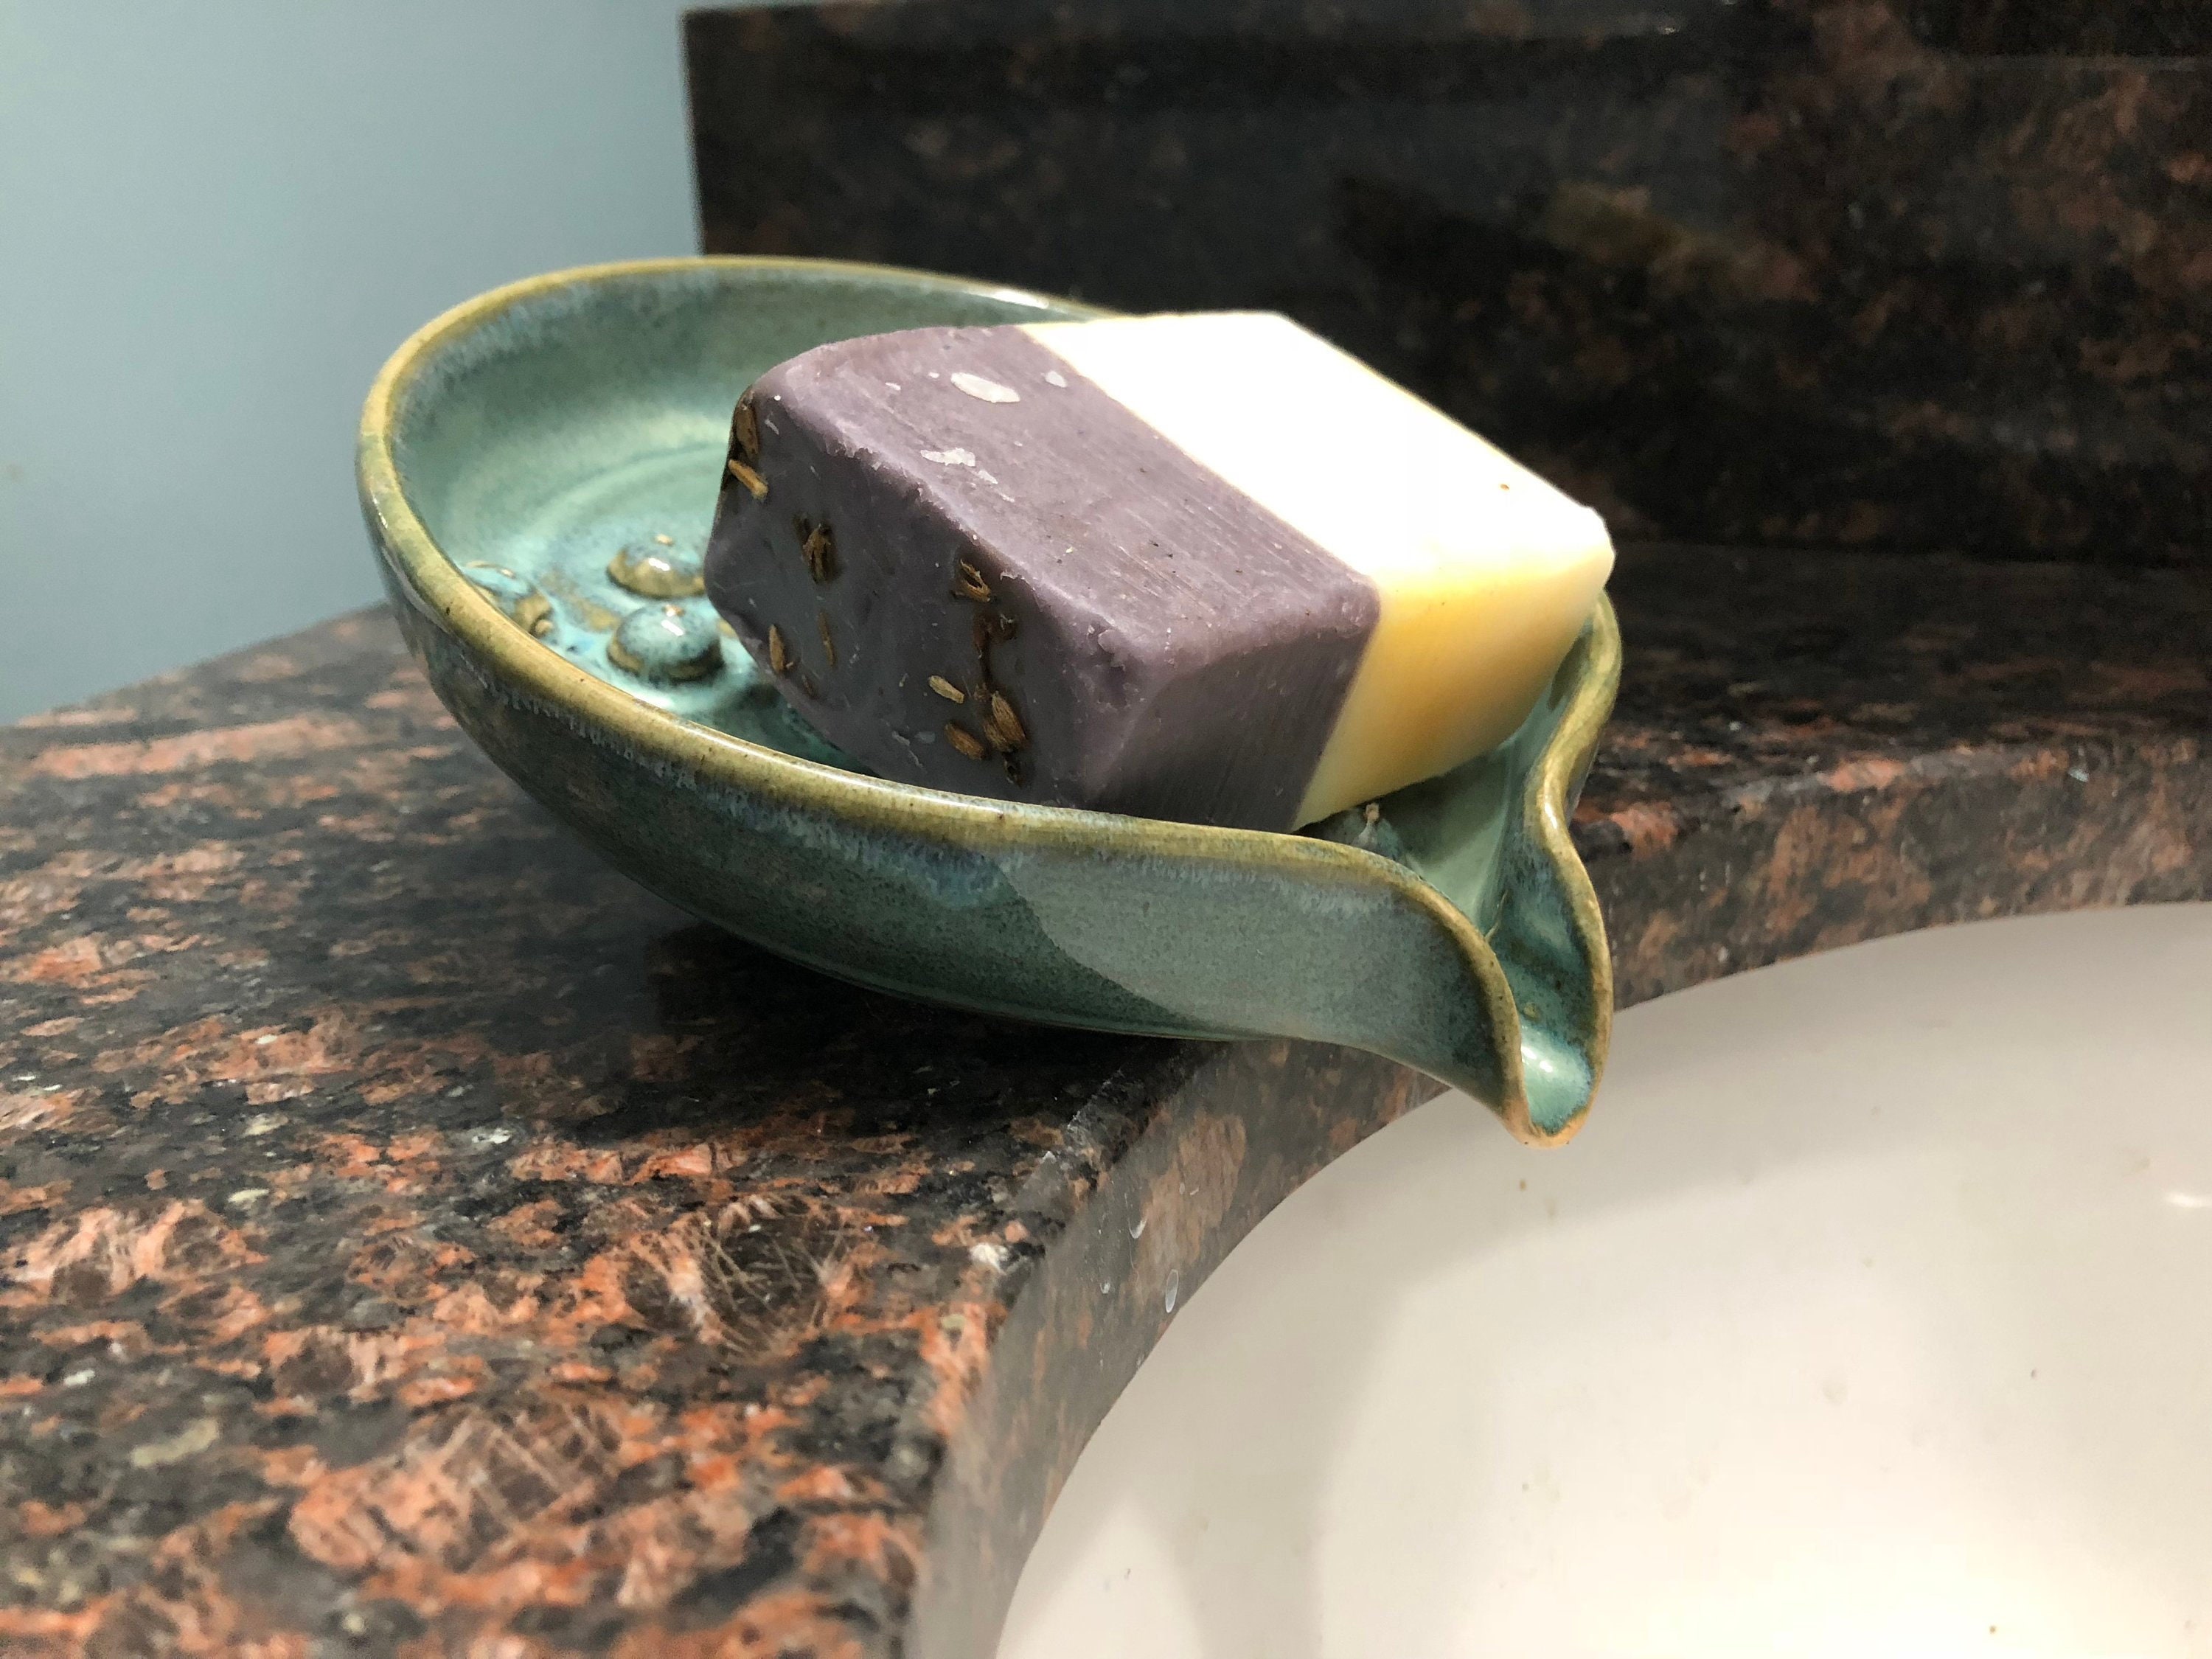 Self-Draining Soap Dish